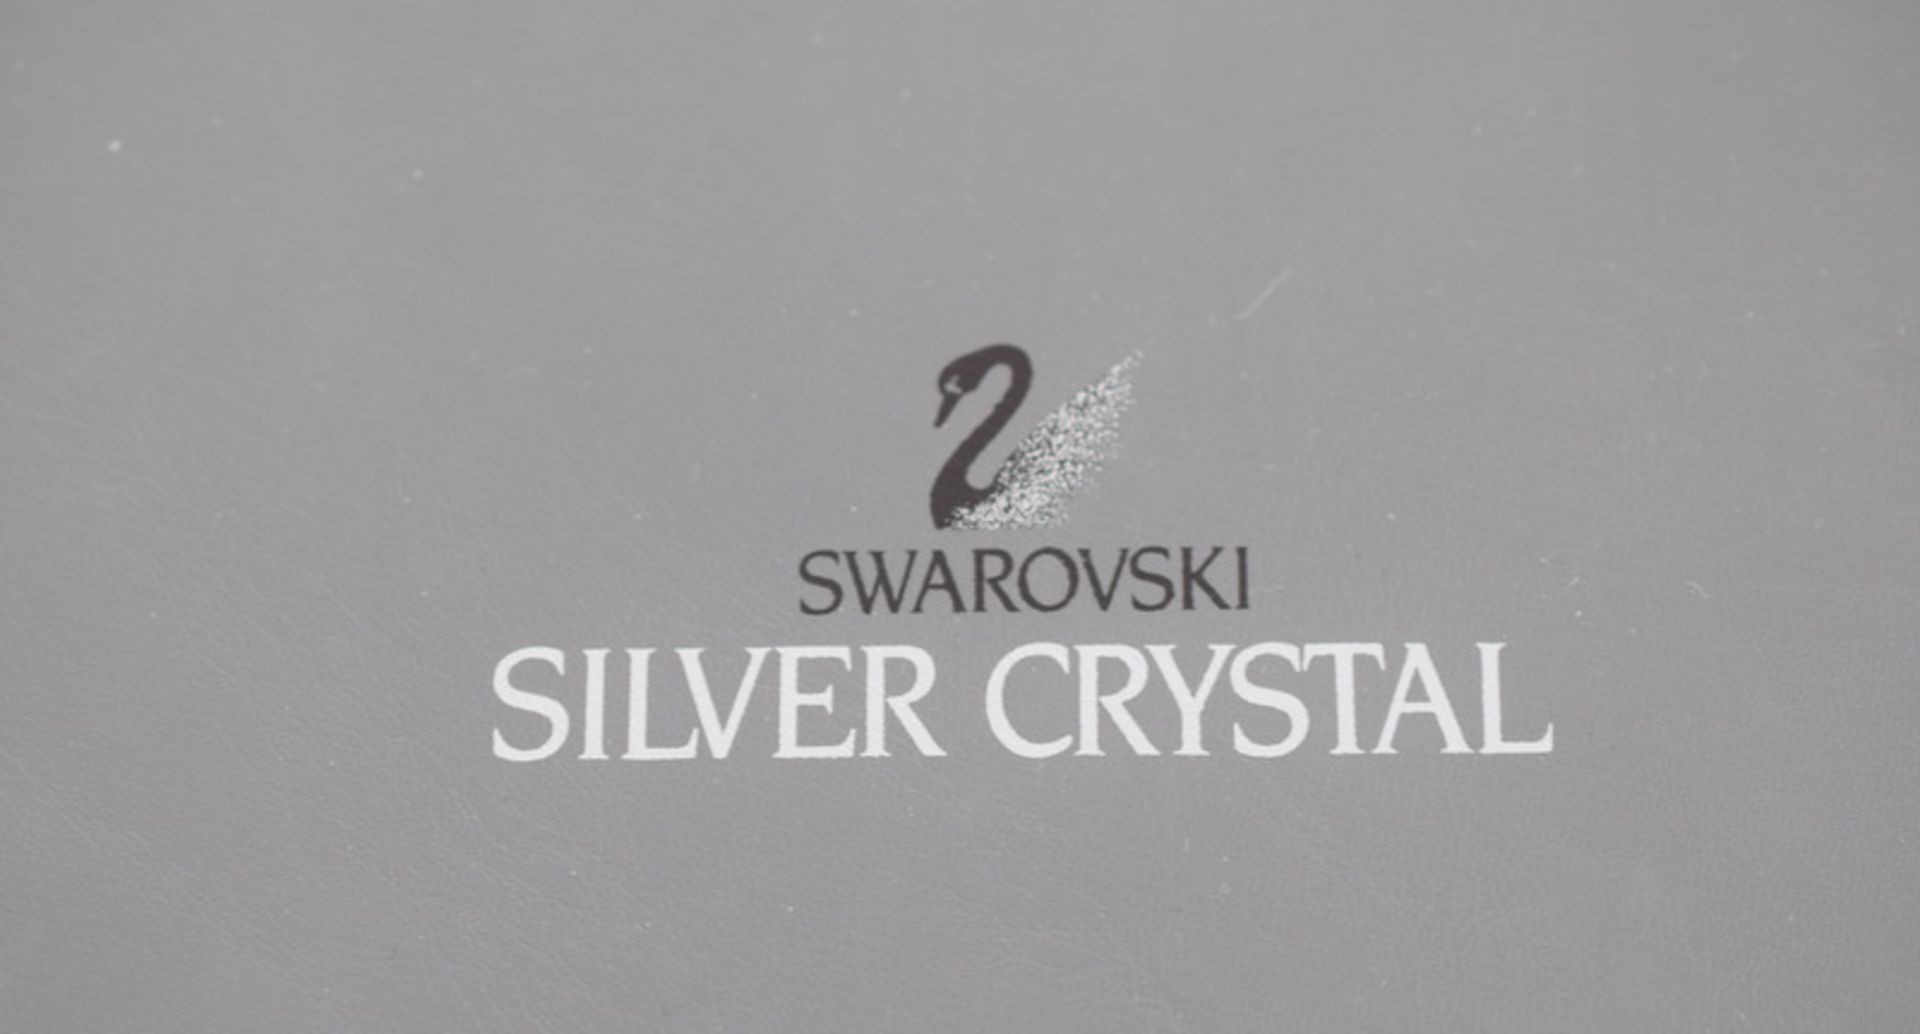 Swarovski Silver Crystal Chess Set Like New In Box - Image 3 of 10